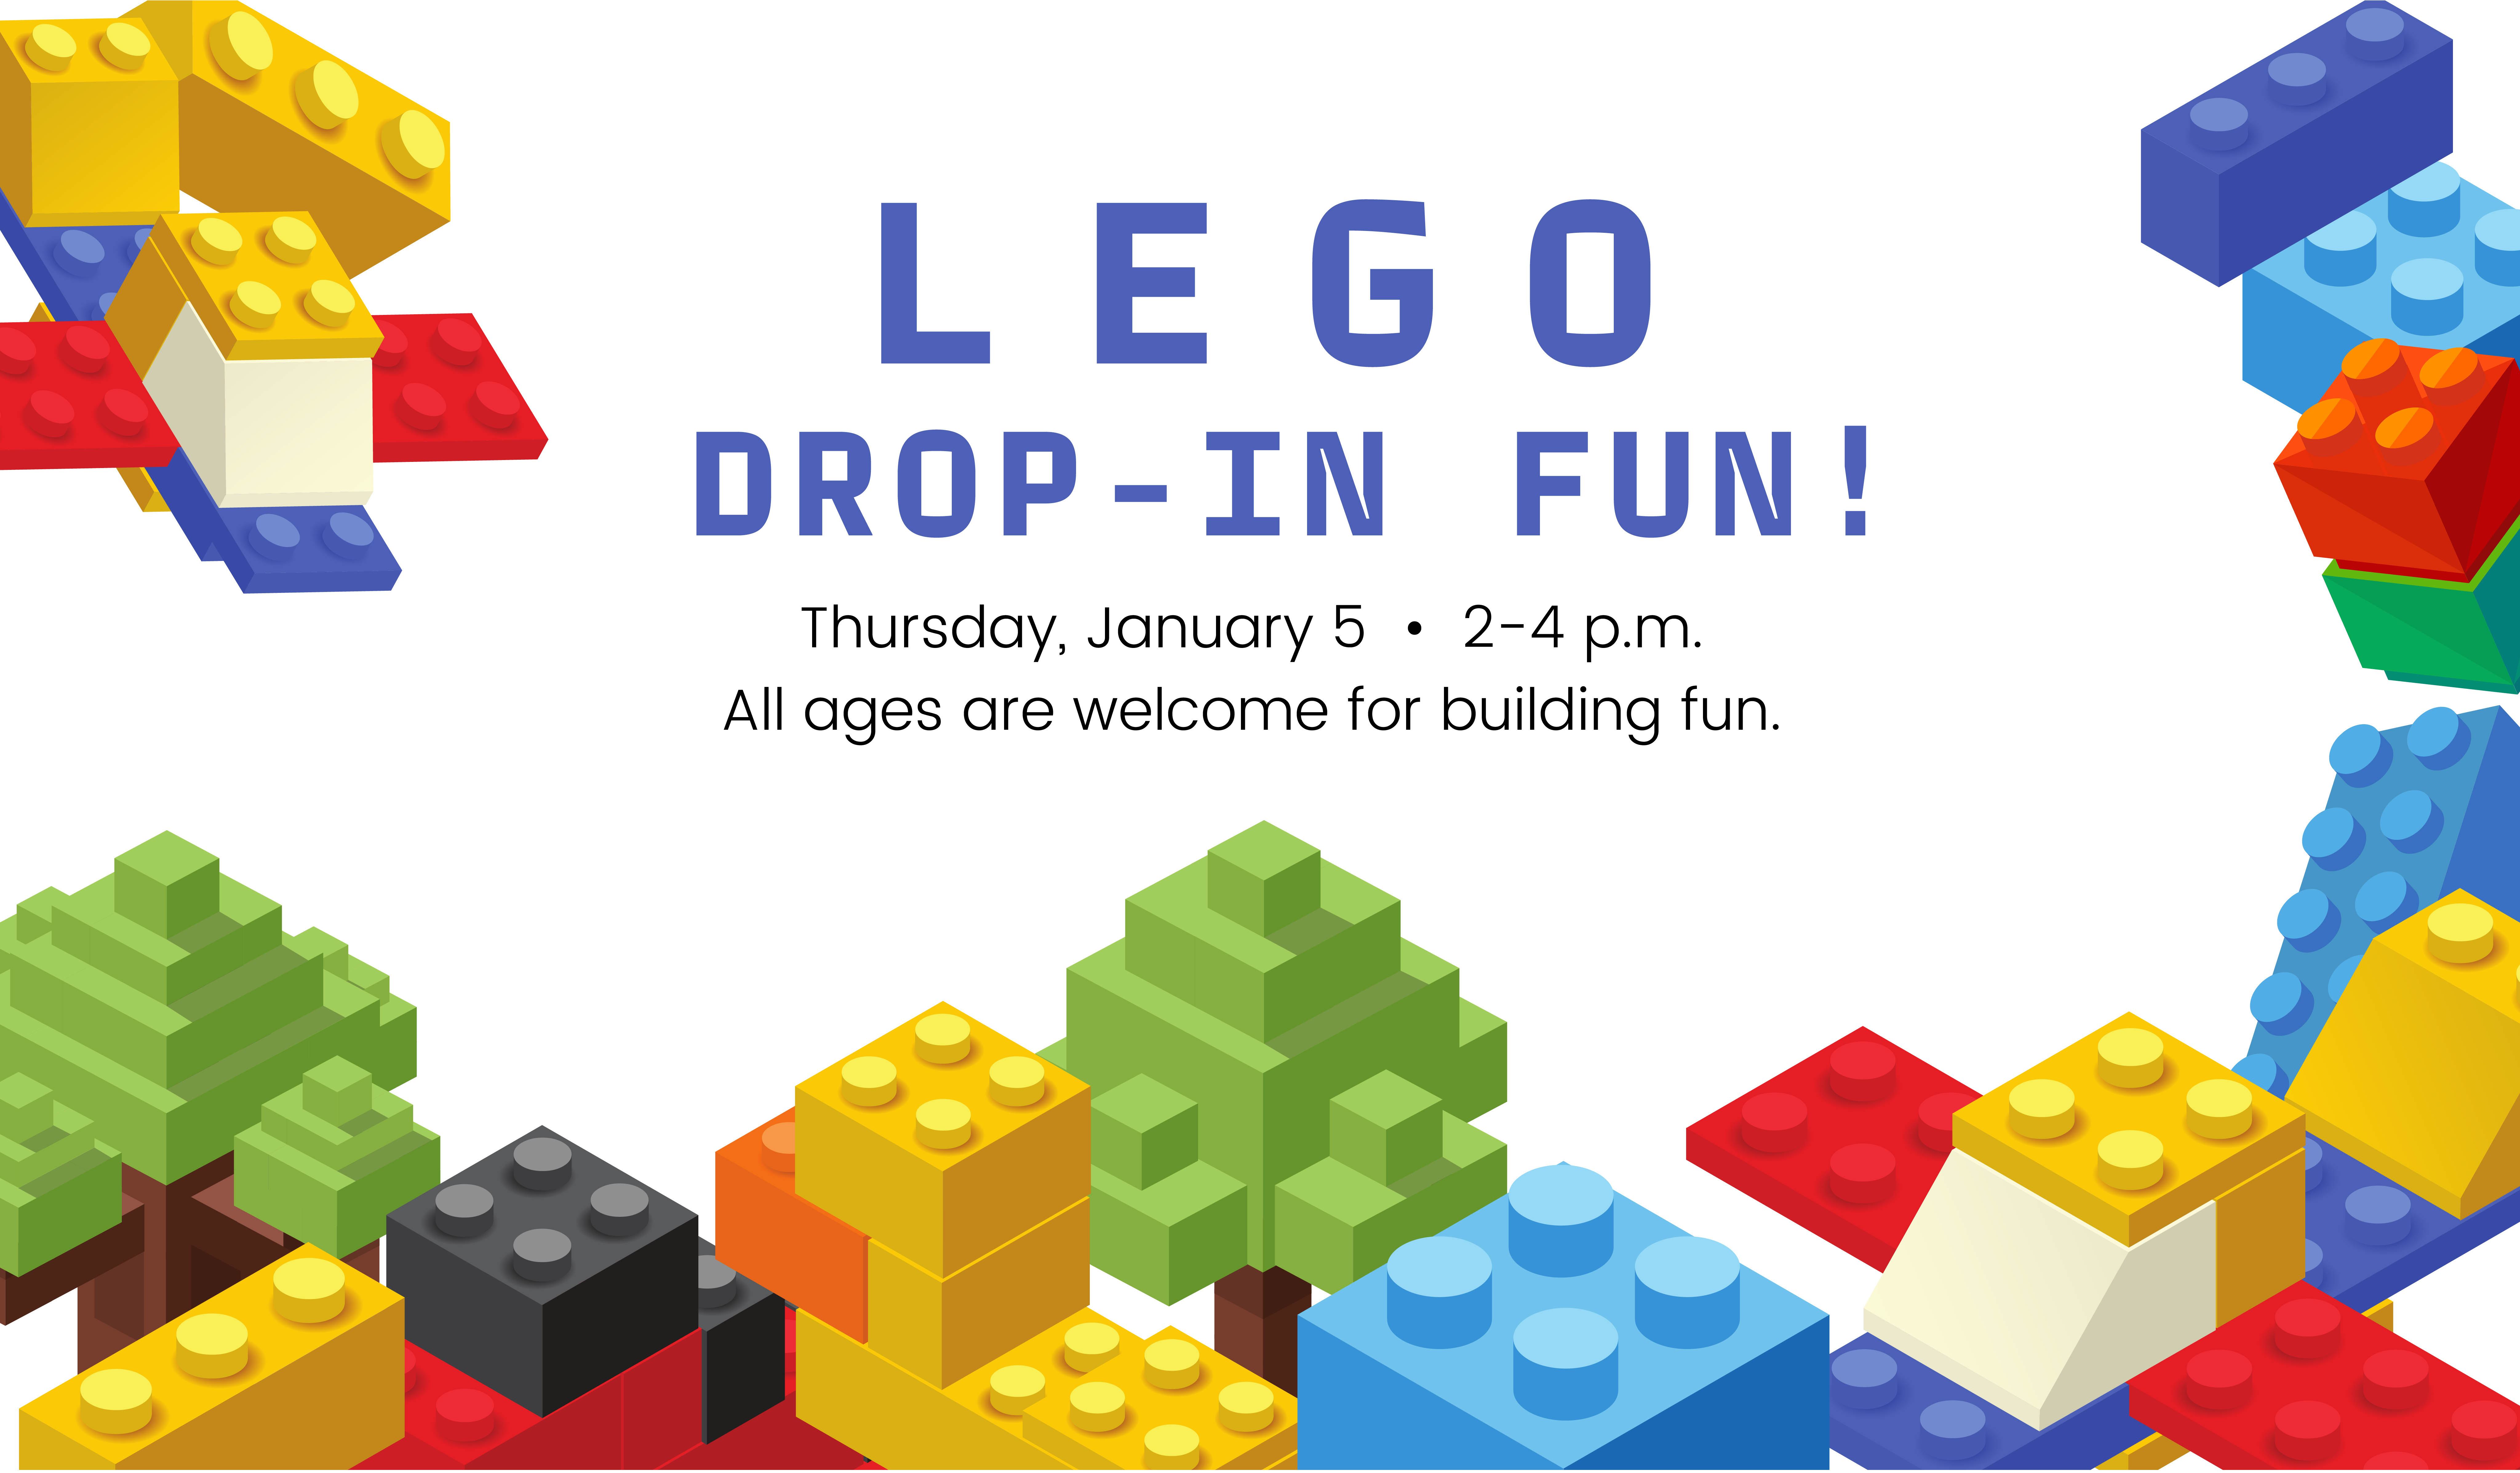 Lego drop in fun event